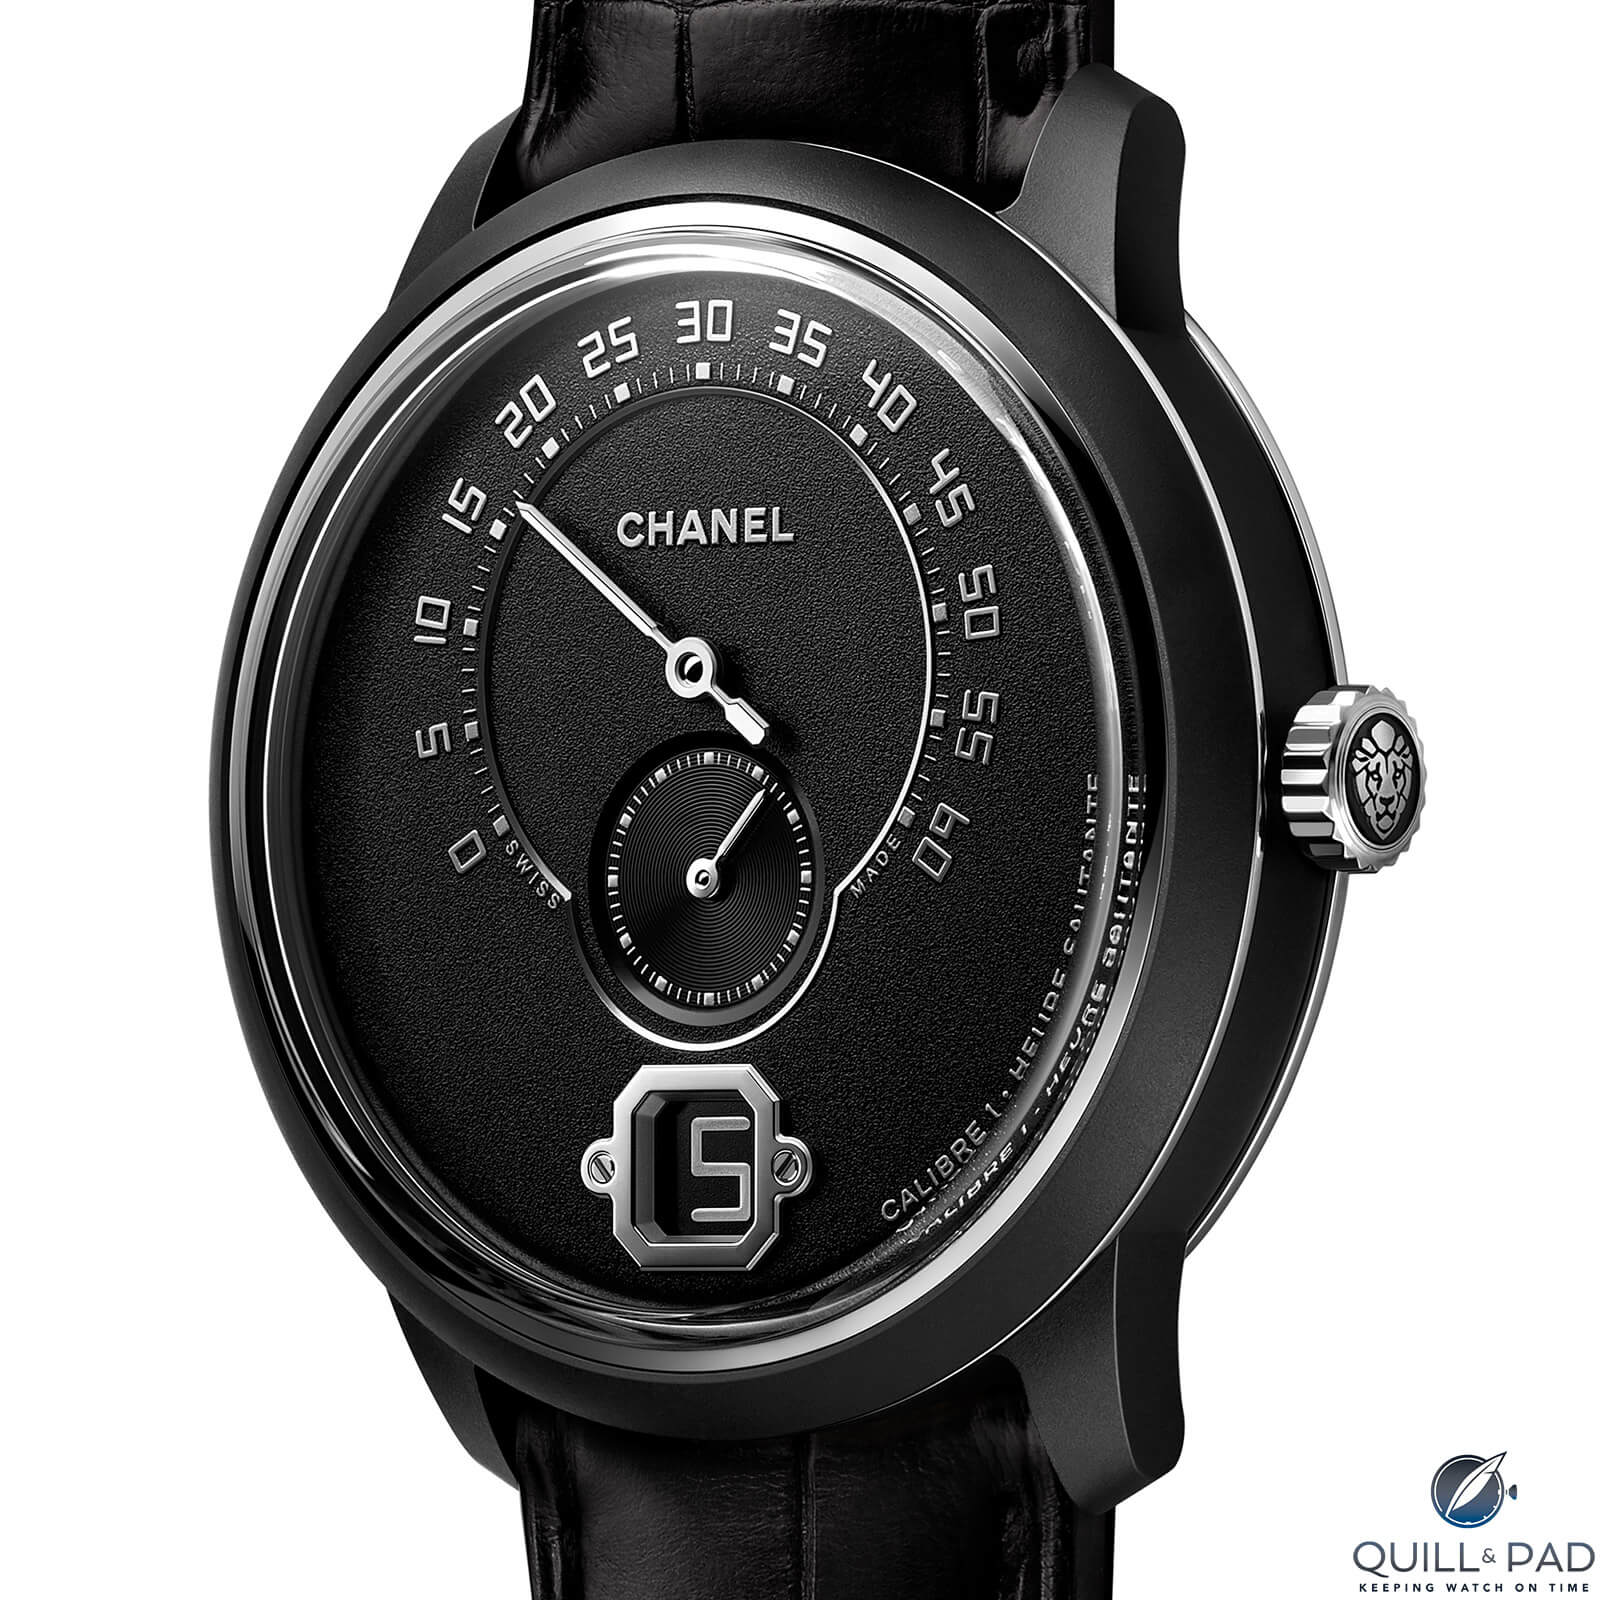 Chanel Monsieur de Chanel Edition Noire: A Great Watch Becomes